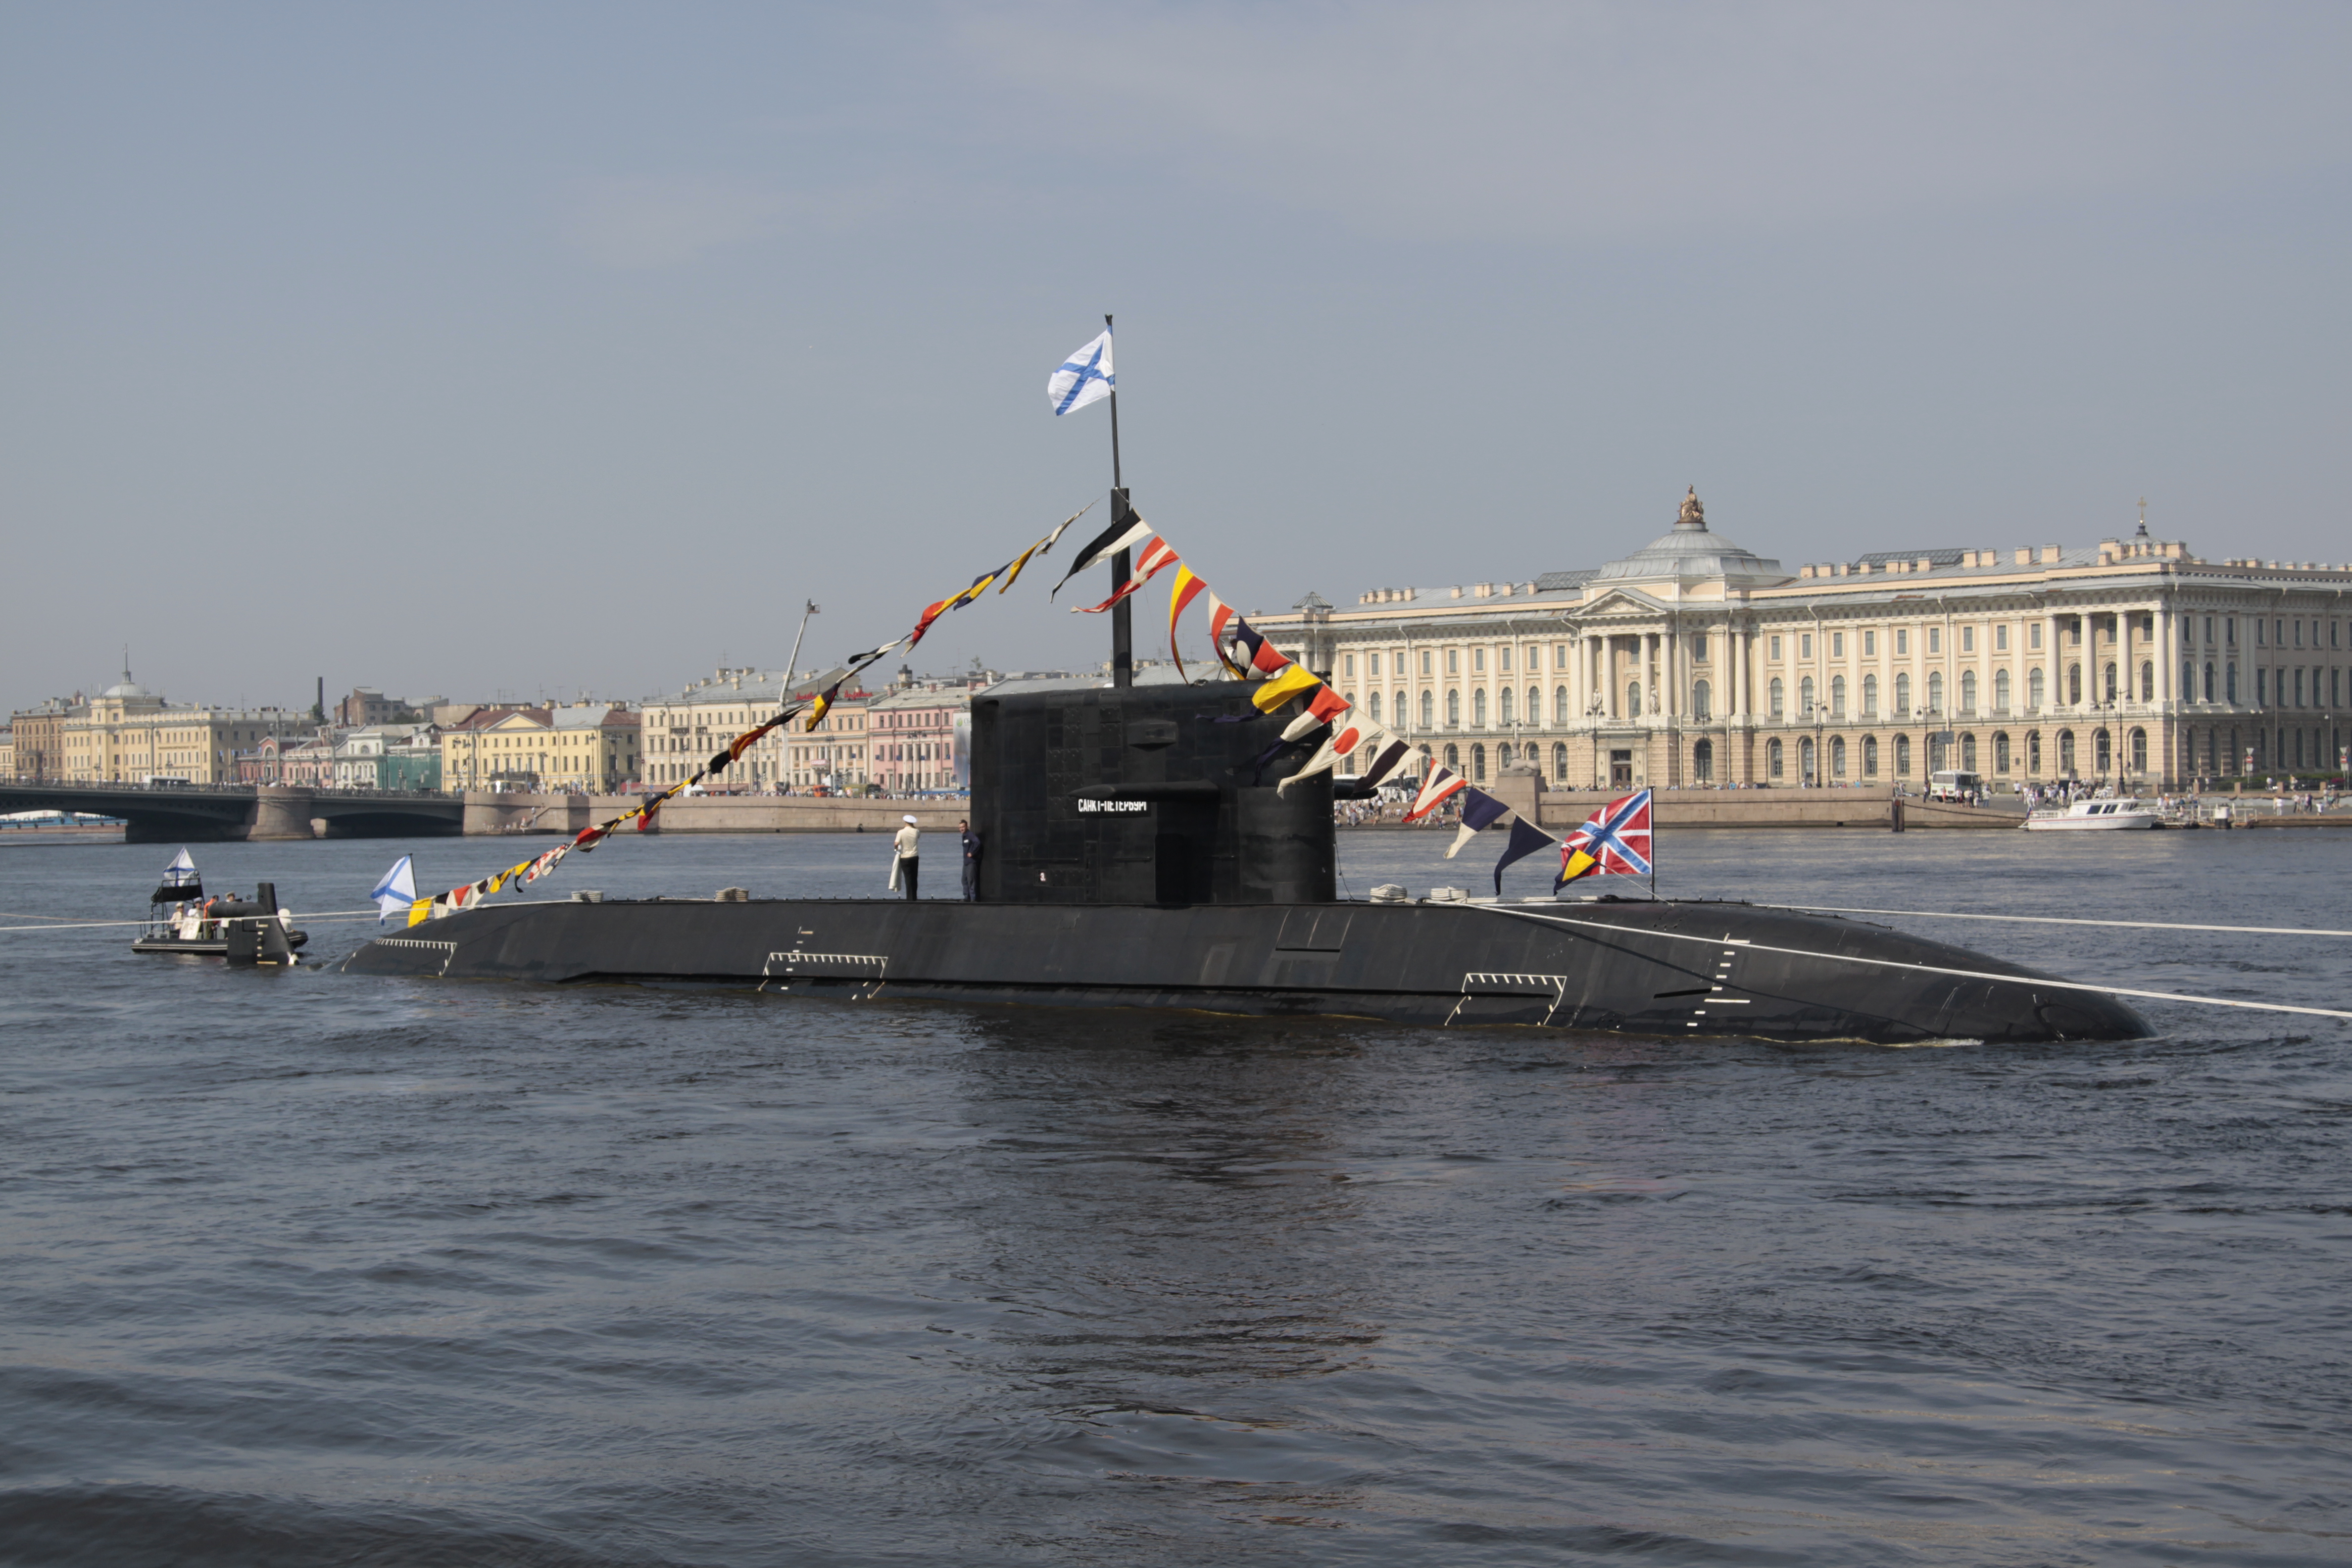 B-585 Sankt-Peterburg in 2010